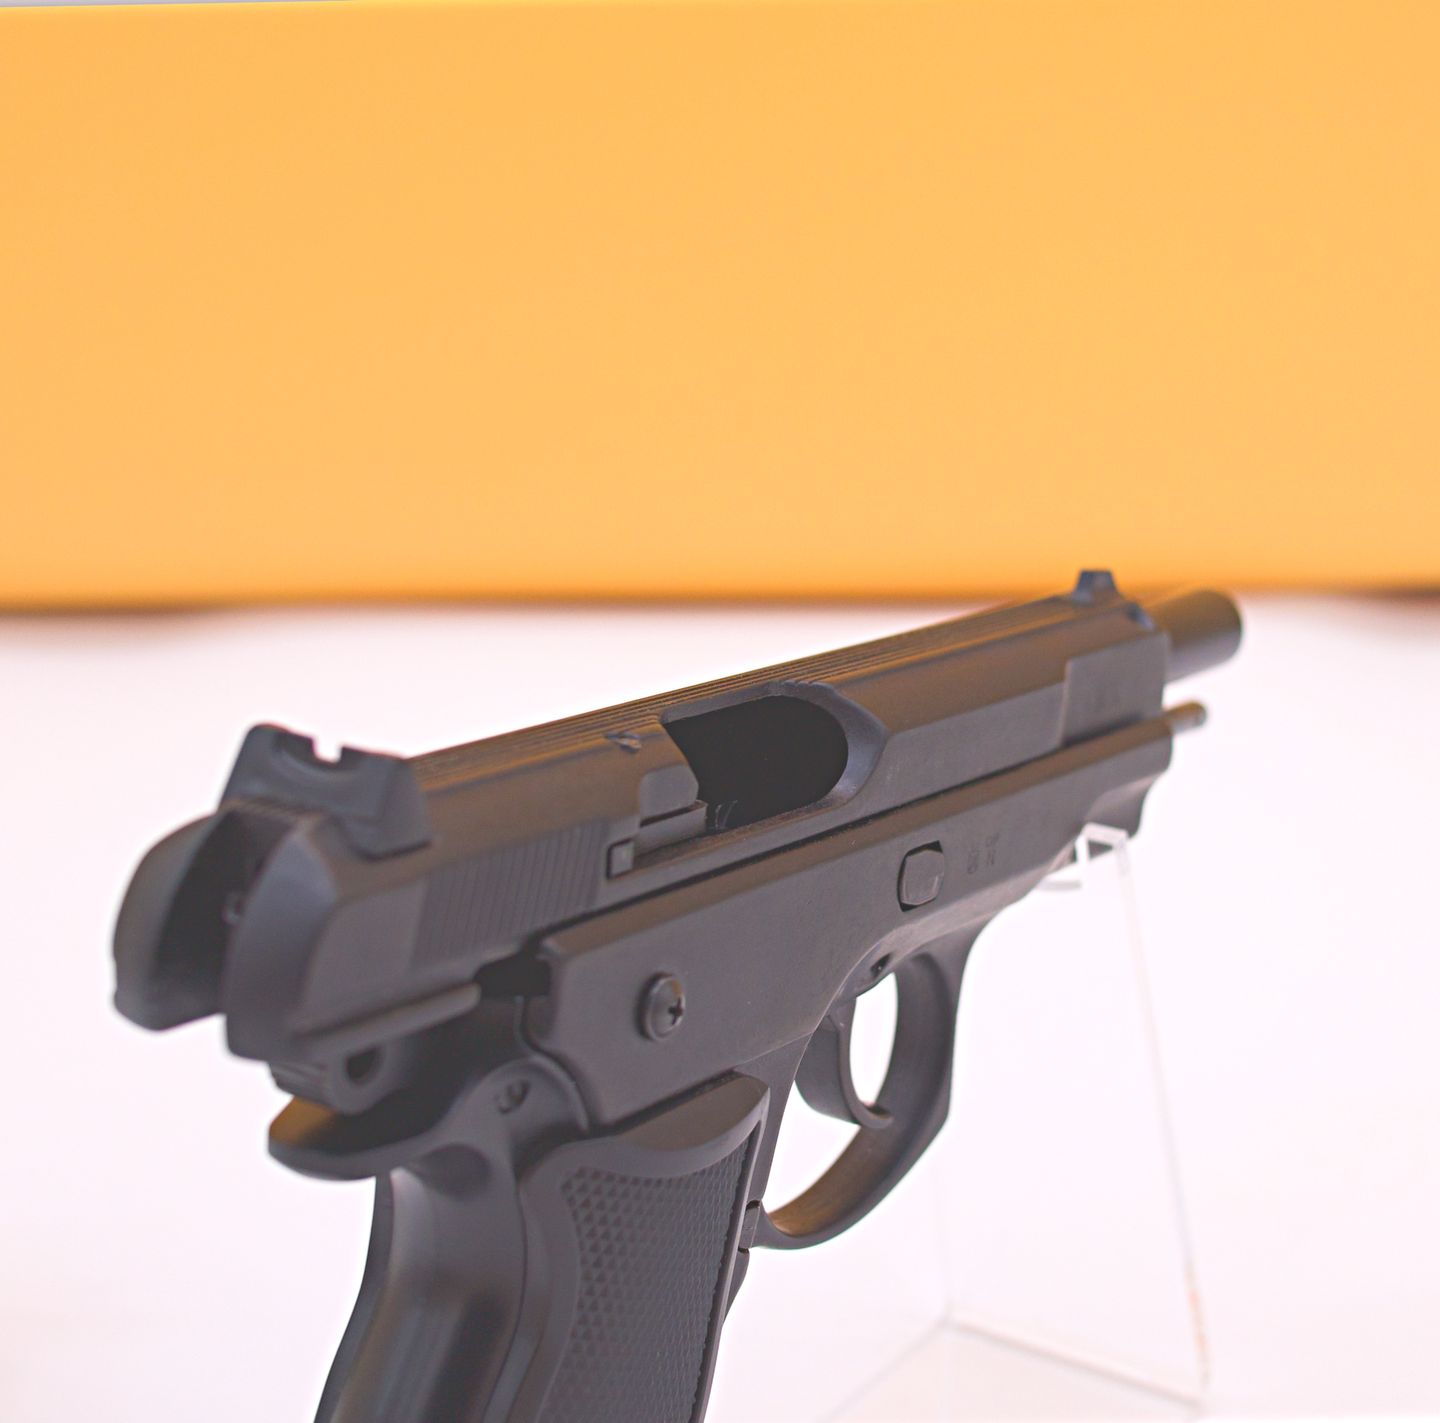 Pistola di allarme e difesa - Pistola d'allarme e difesa Kimar 75 9mm PAK – stile CZ 75